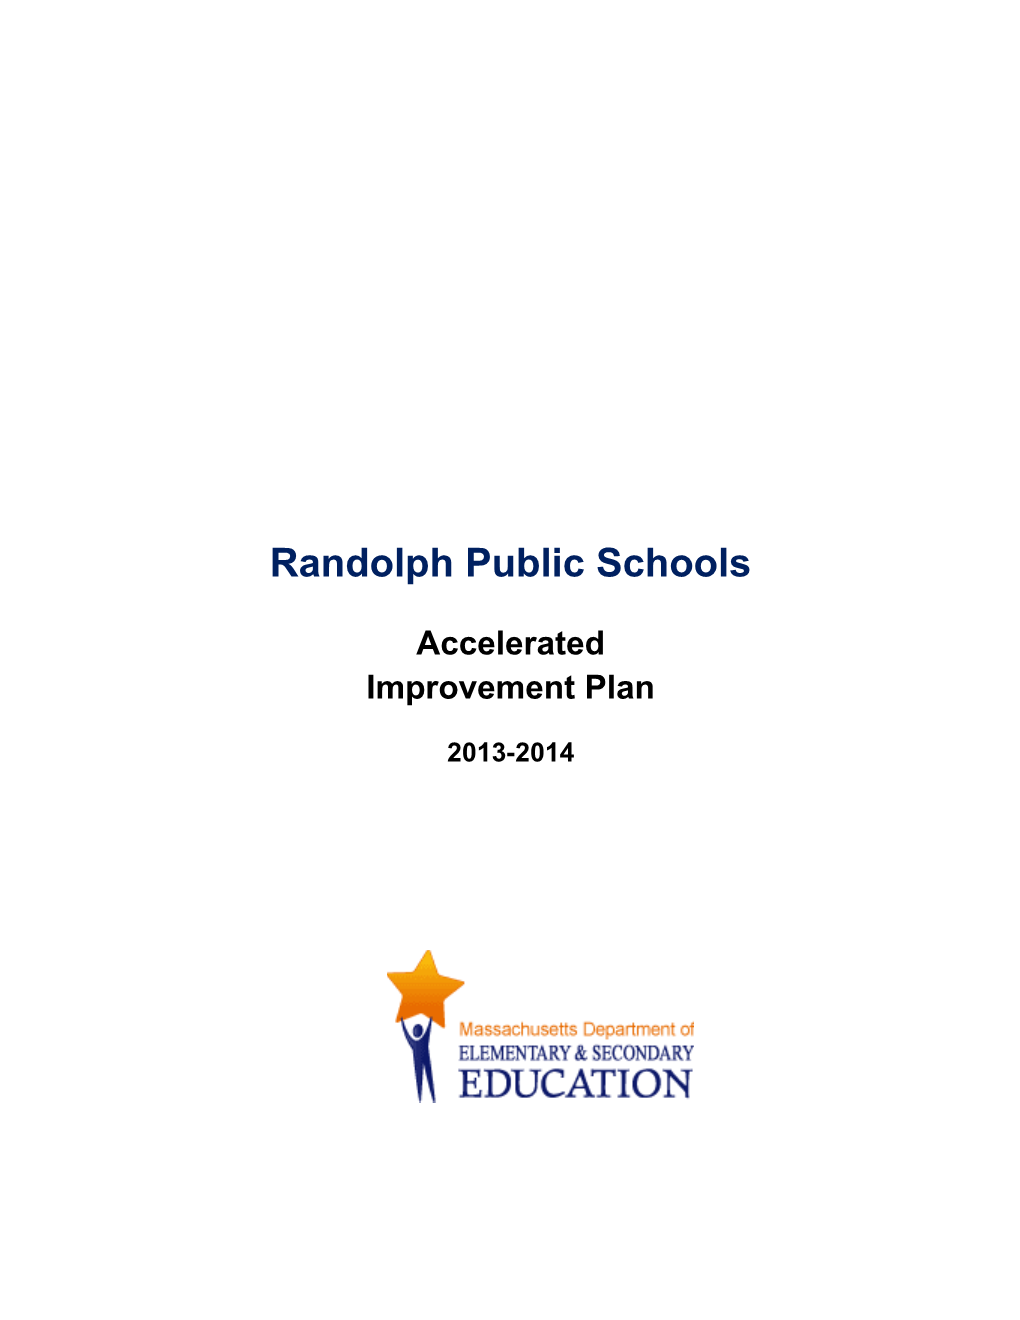 Randolph Accelerated Improvement Plan 2013